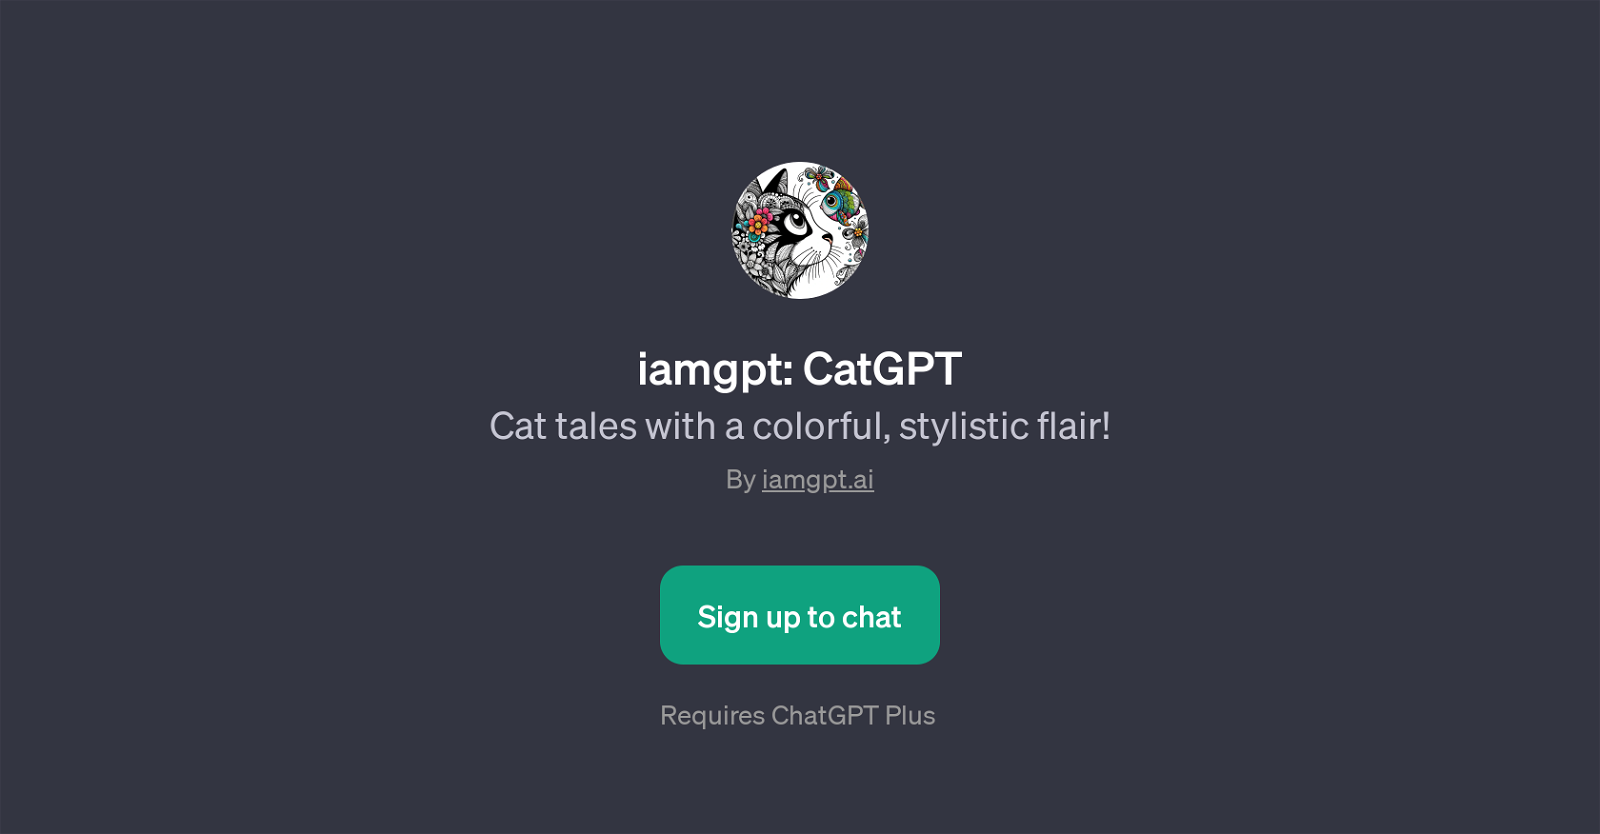 iamgpt: CatGPT website